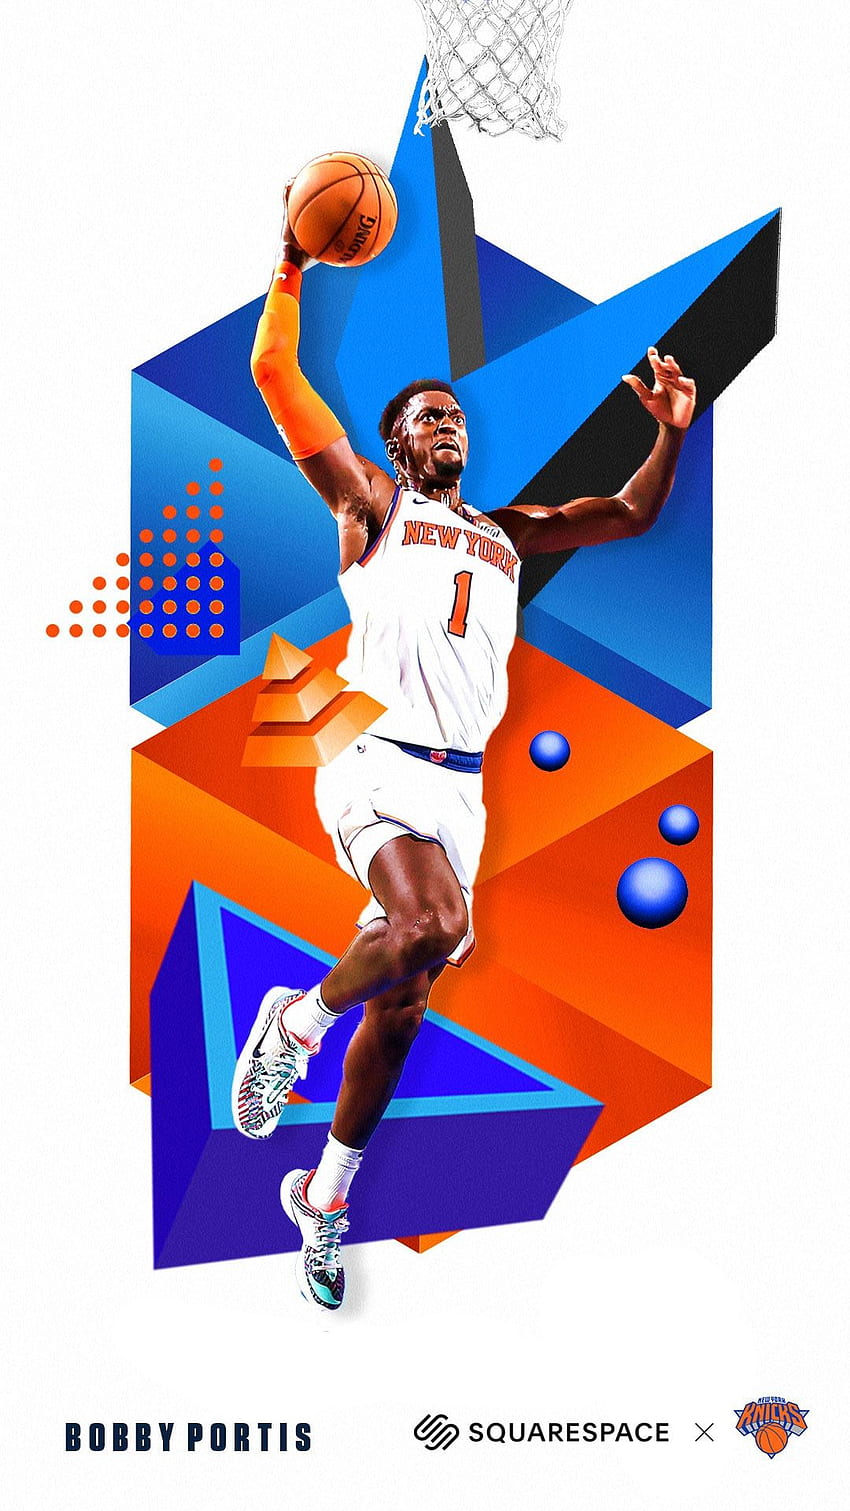 RJ Barrett New York Knicks NBA Canadian basketball player basketball  blue stone background HD wallpaper  Peakpx